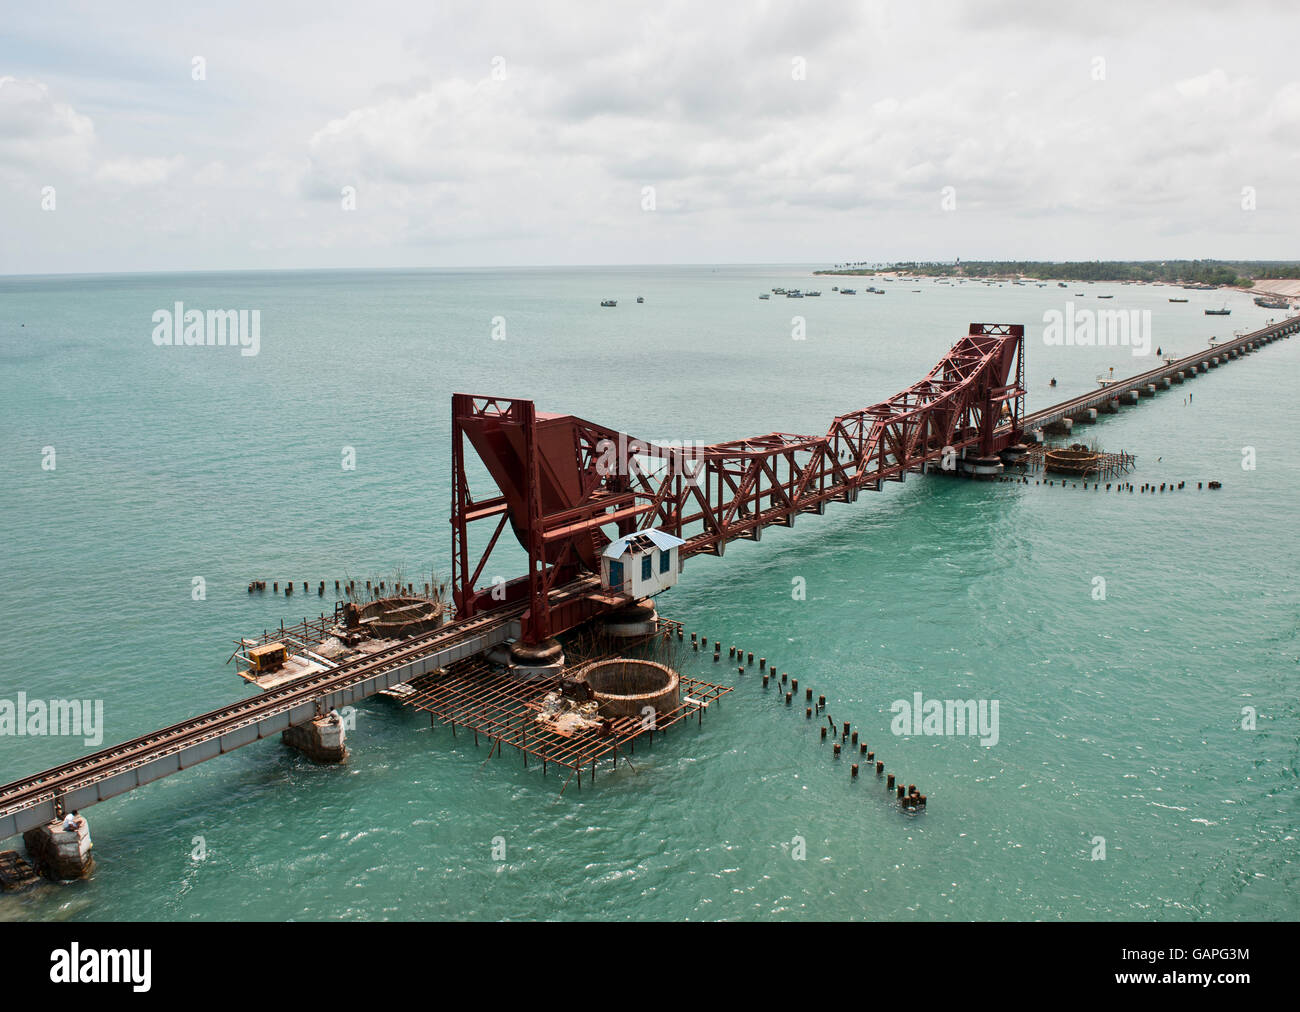 Long and old railway bridge with drawbridge built on sea connecting mainland of south Tamil Nadu India to island of Rameshwaram. Stock Photo